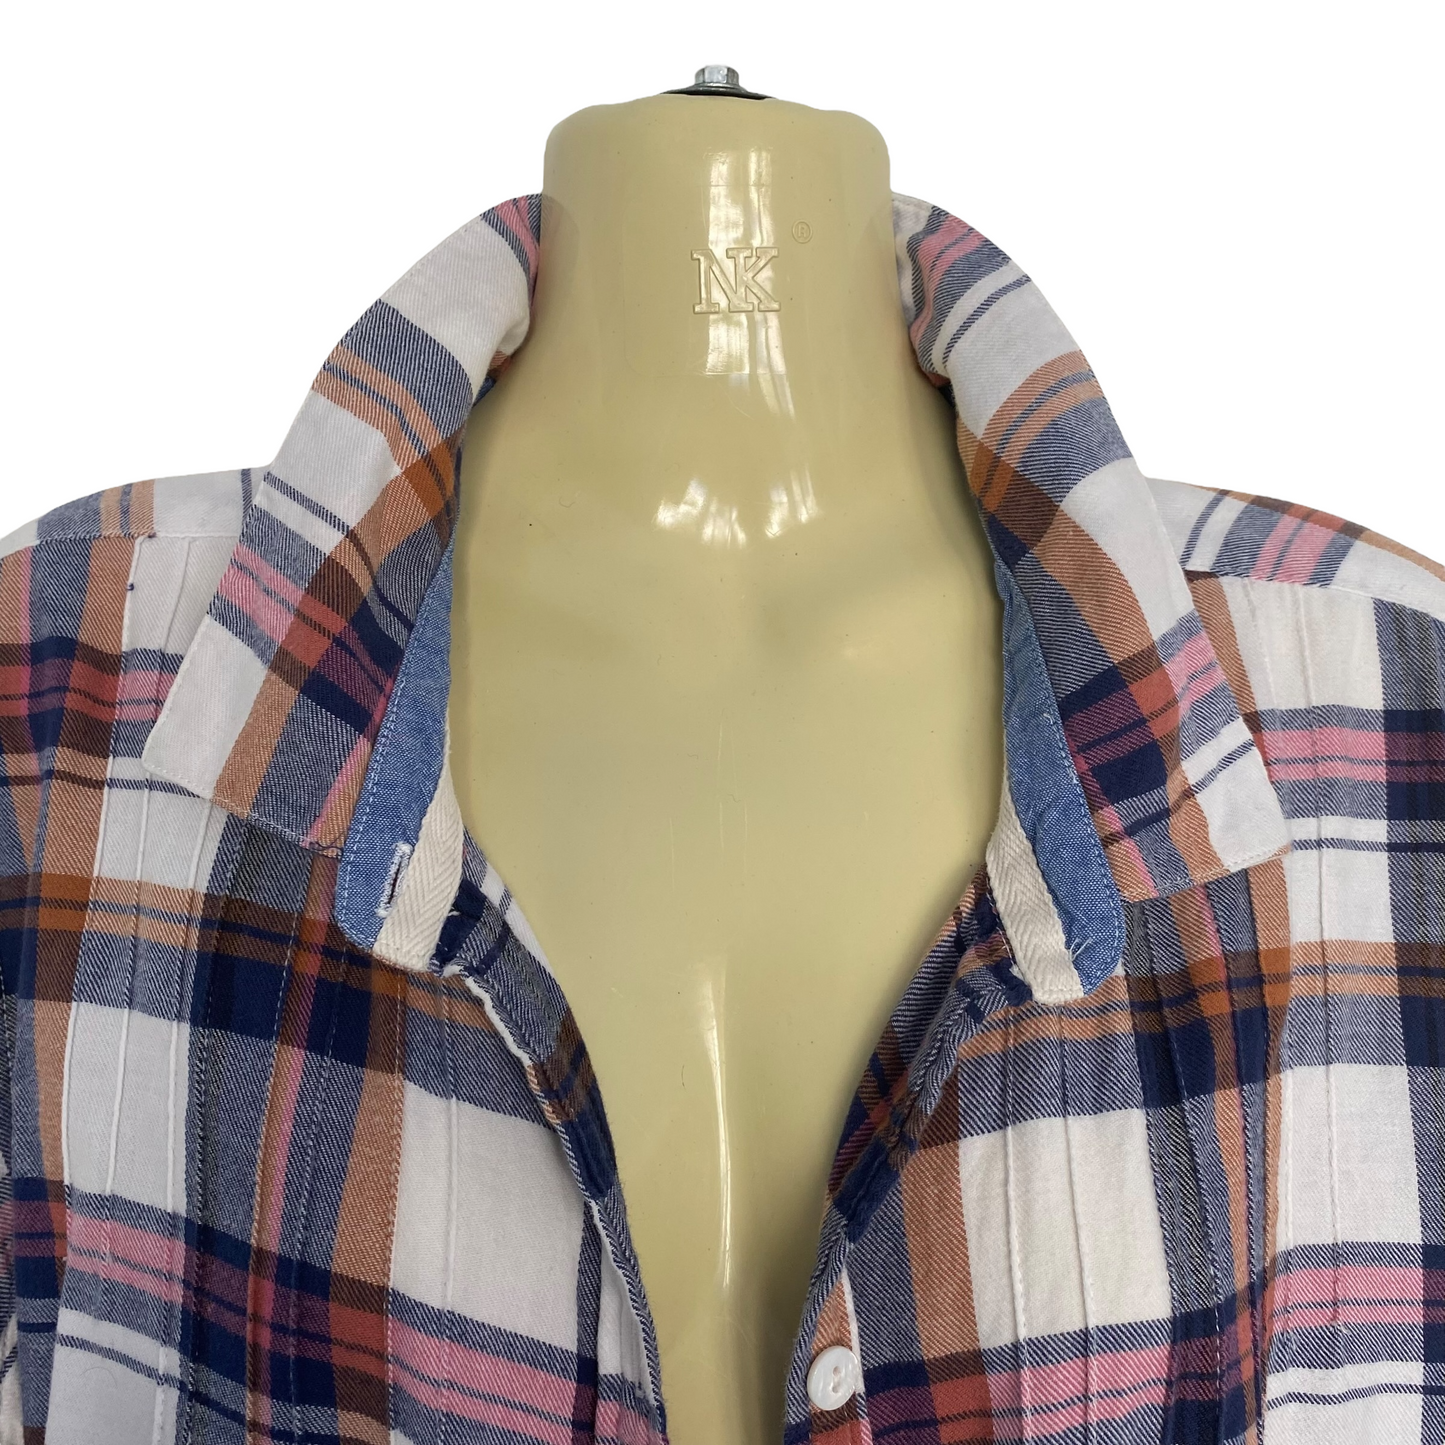 Anthropologie Isabella Sinclair Plaid Flannel Shirt Size Large